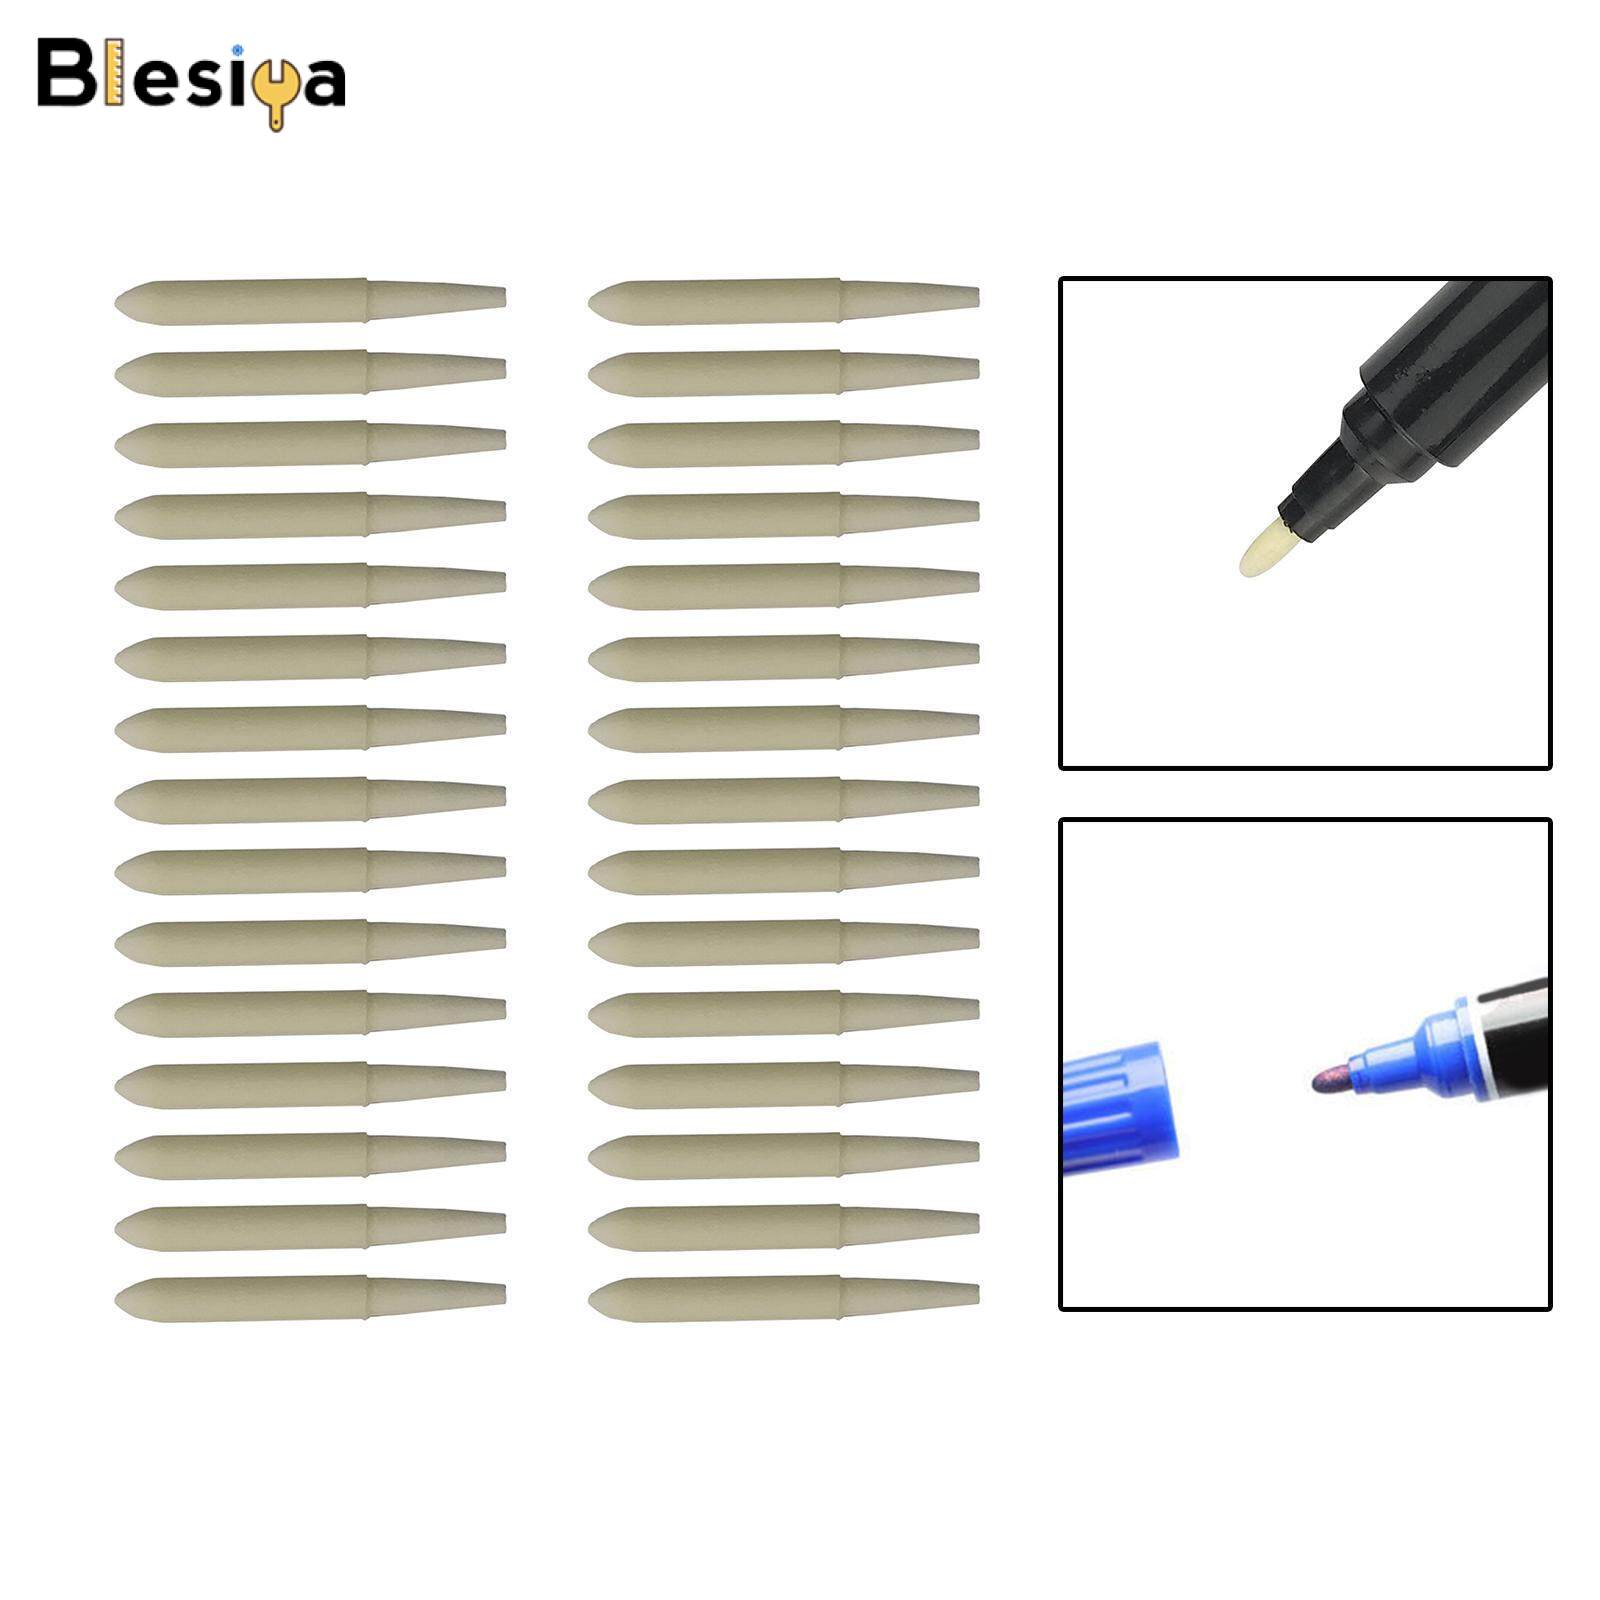 Blesiya 30x Refillable Pen Double Head Fine Replacement Nib Whiteboard Pen